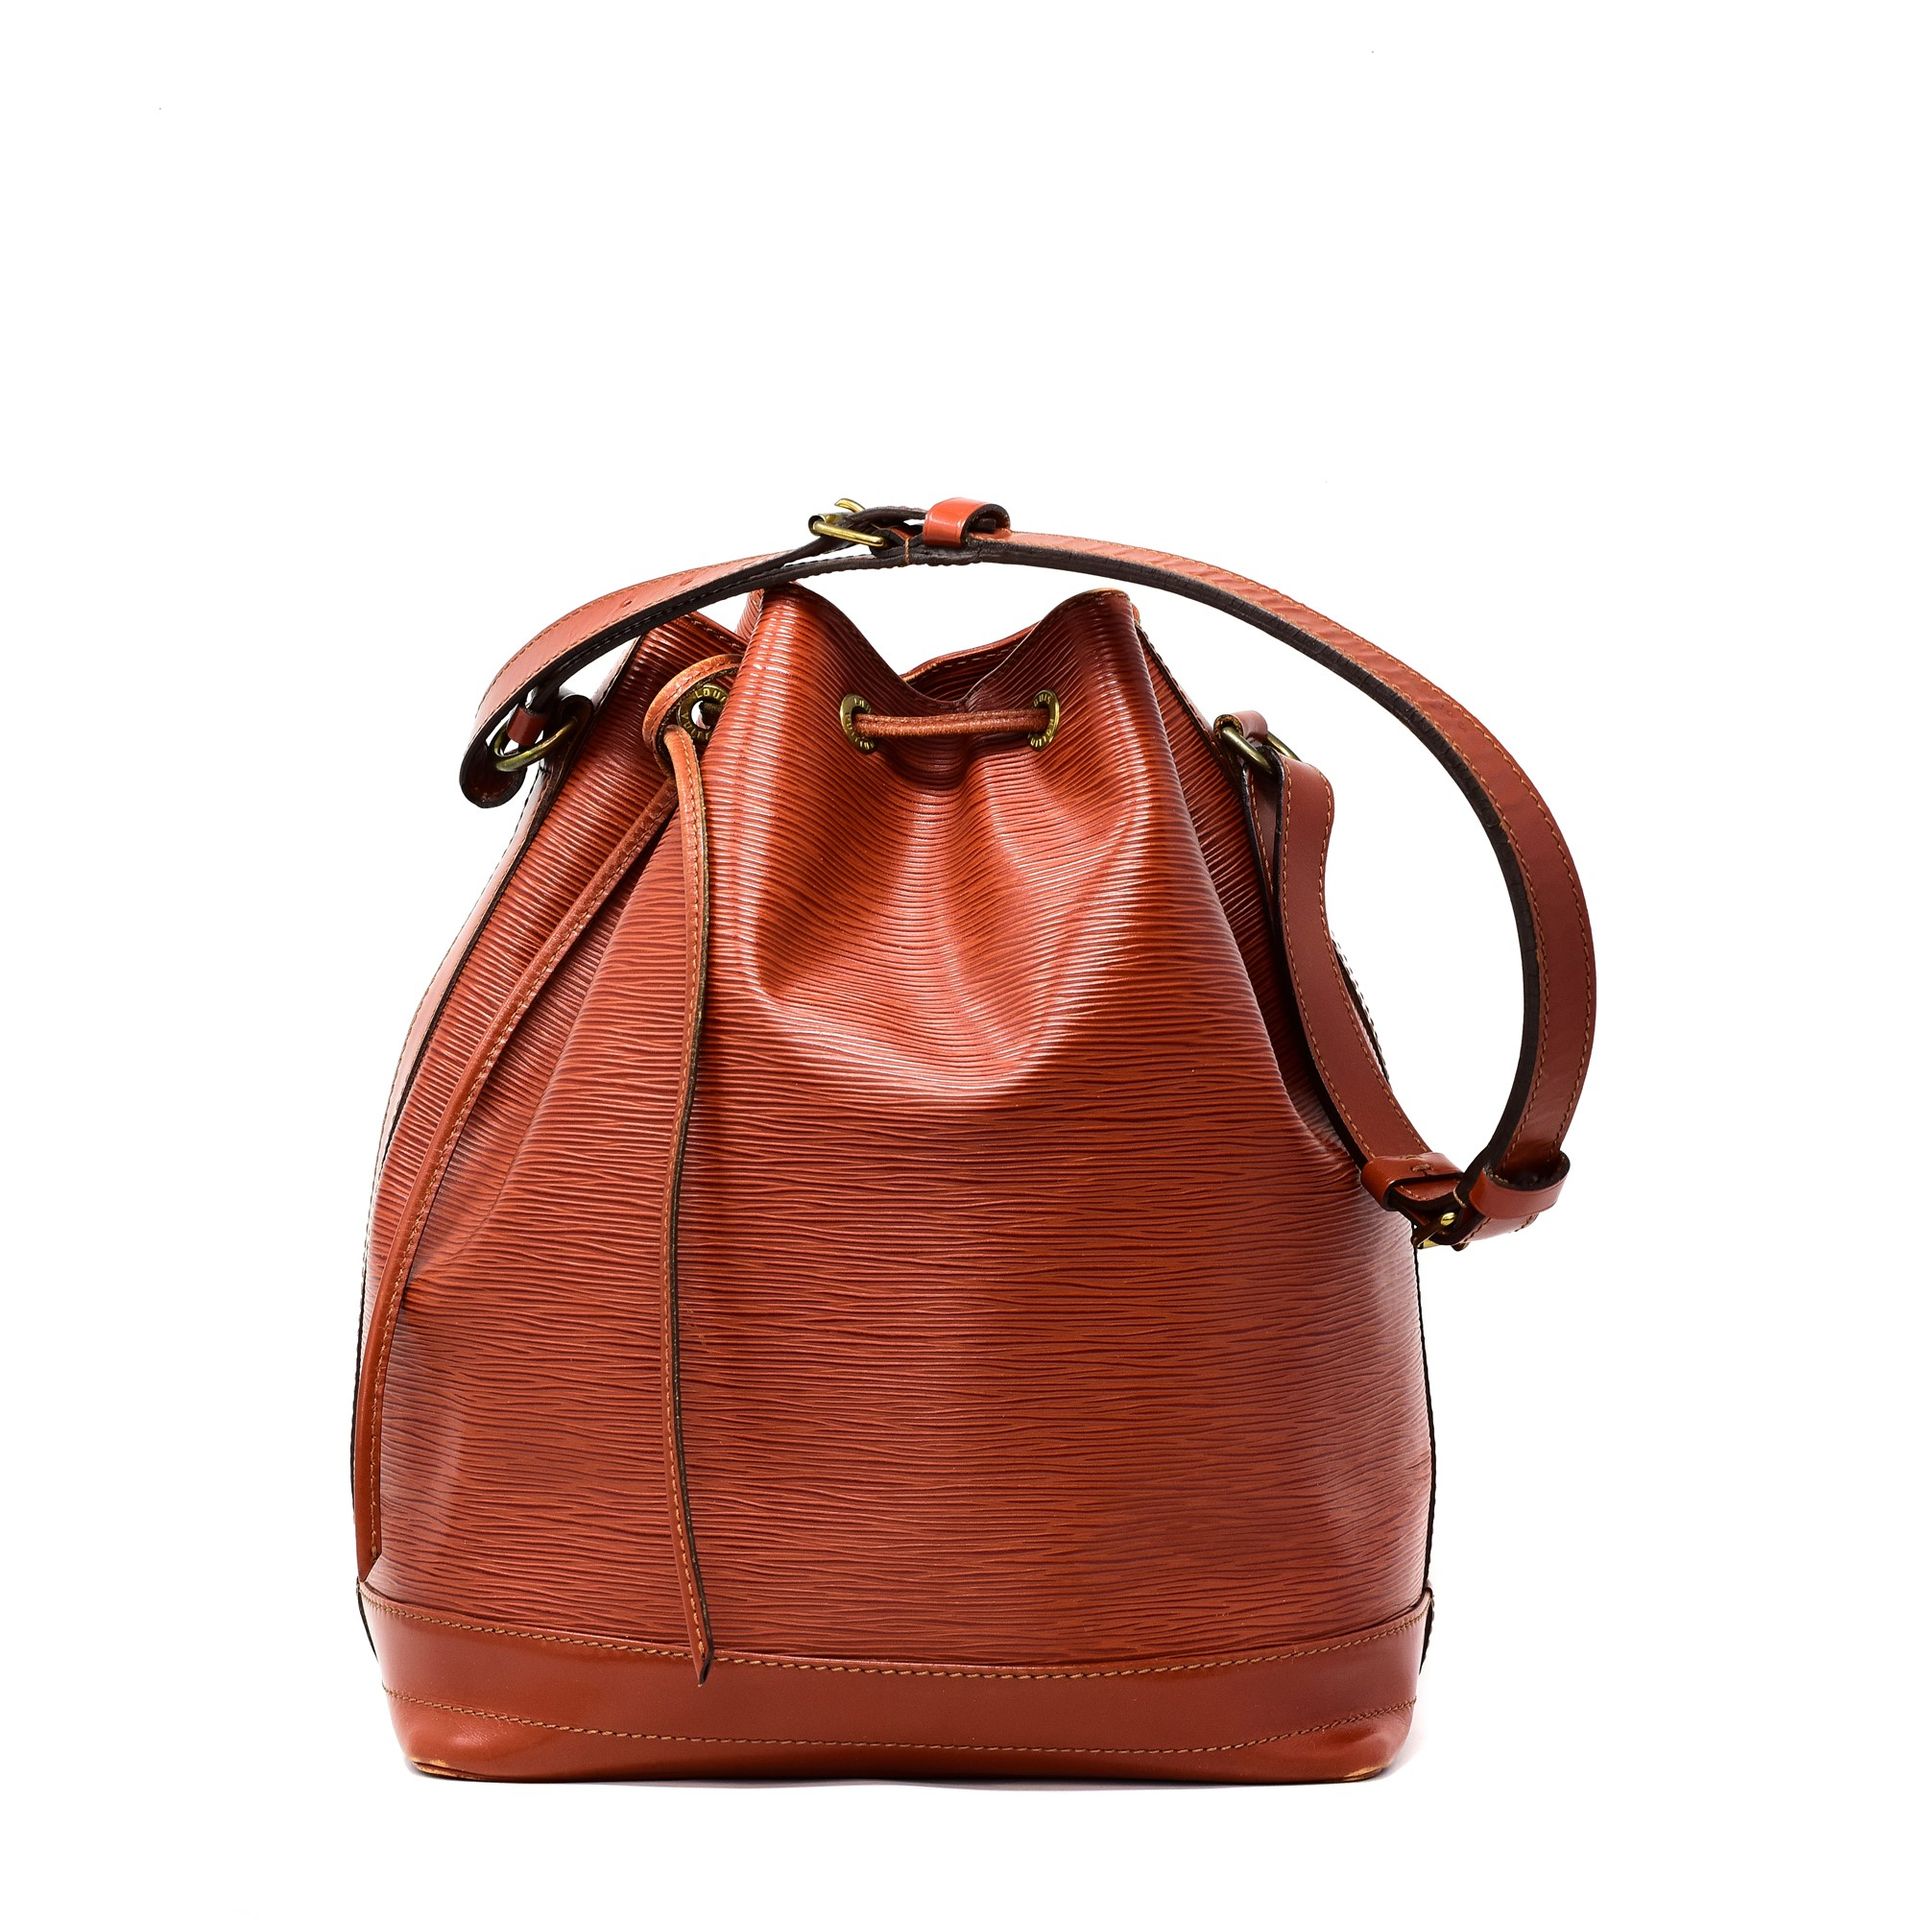 LOUIS VUITTON Louis Vuitton Noe bucket bag in brown epi leather, drawstring clos&hellip;